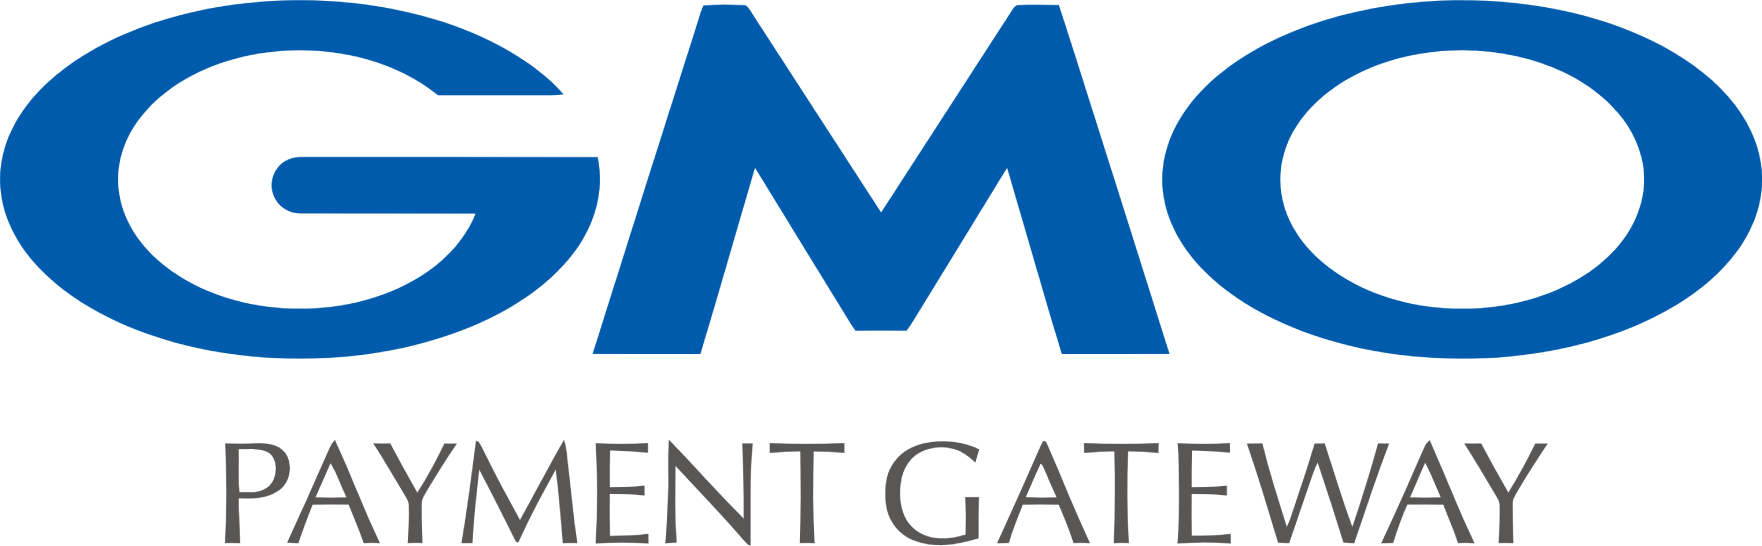 GMO Payment Gateway logo large (transparent PNG)